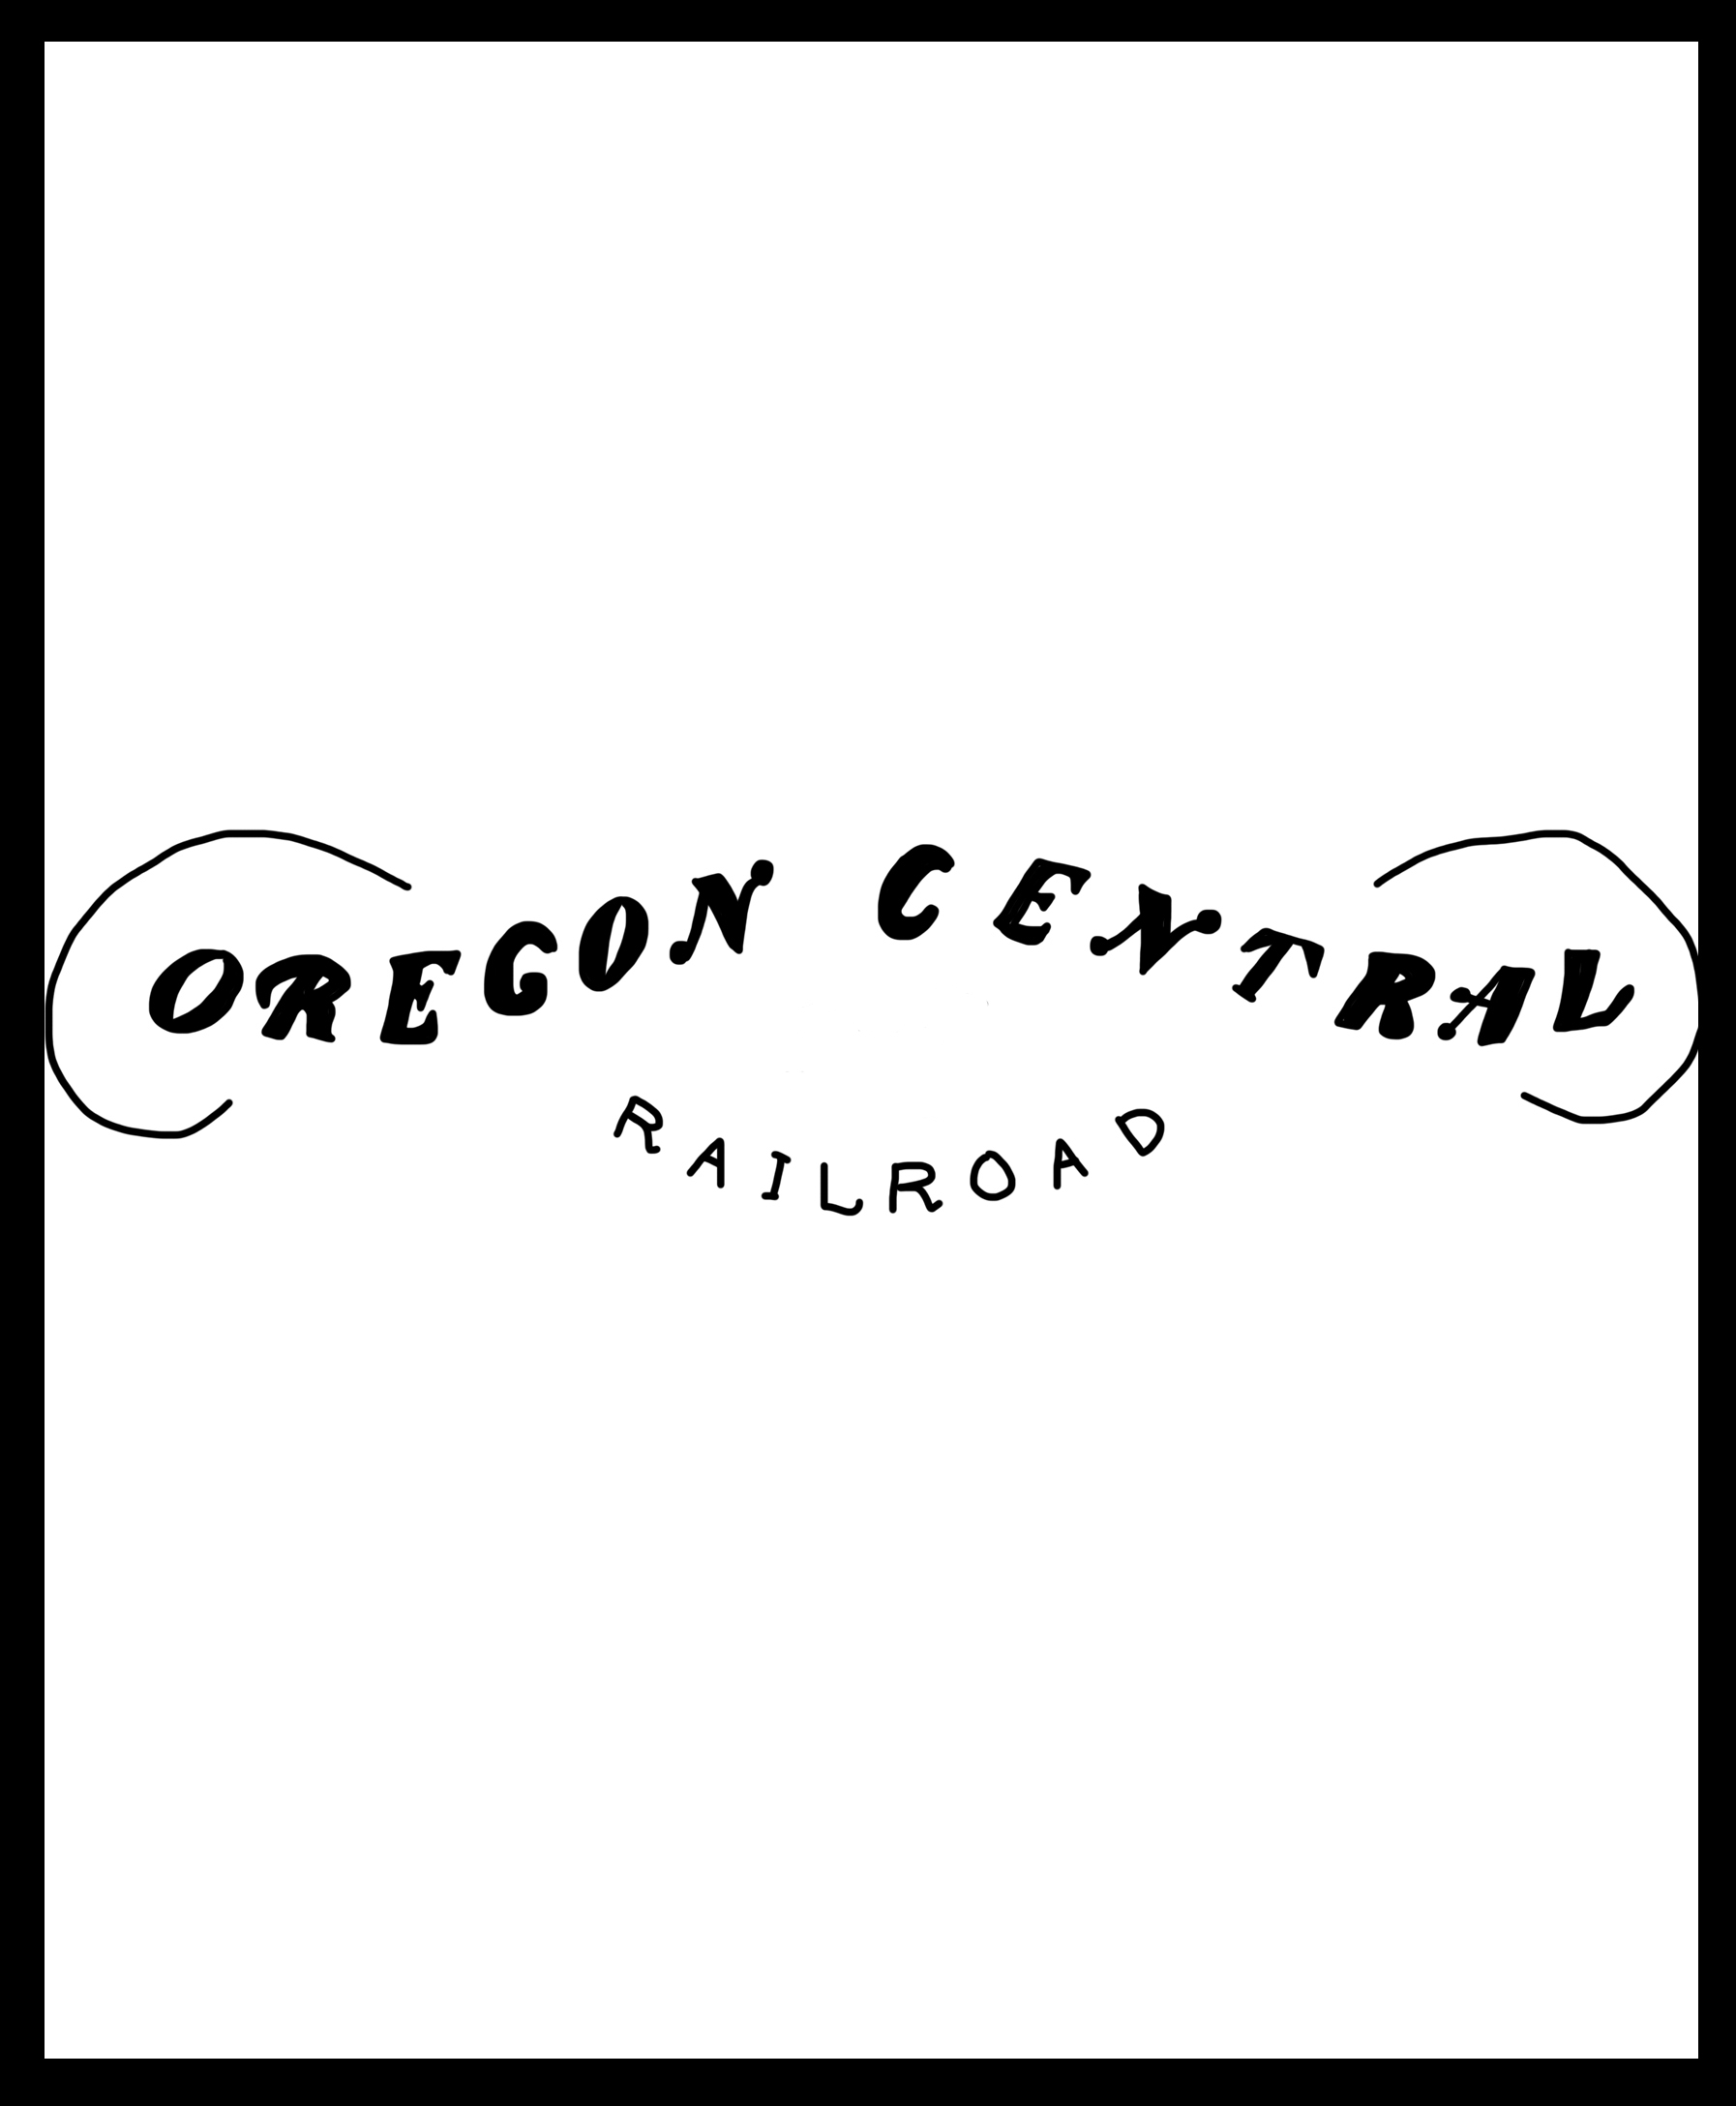 Oregon Central